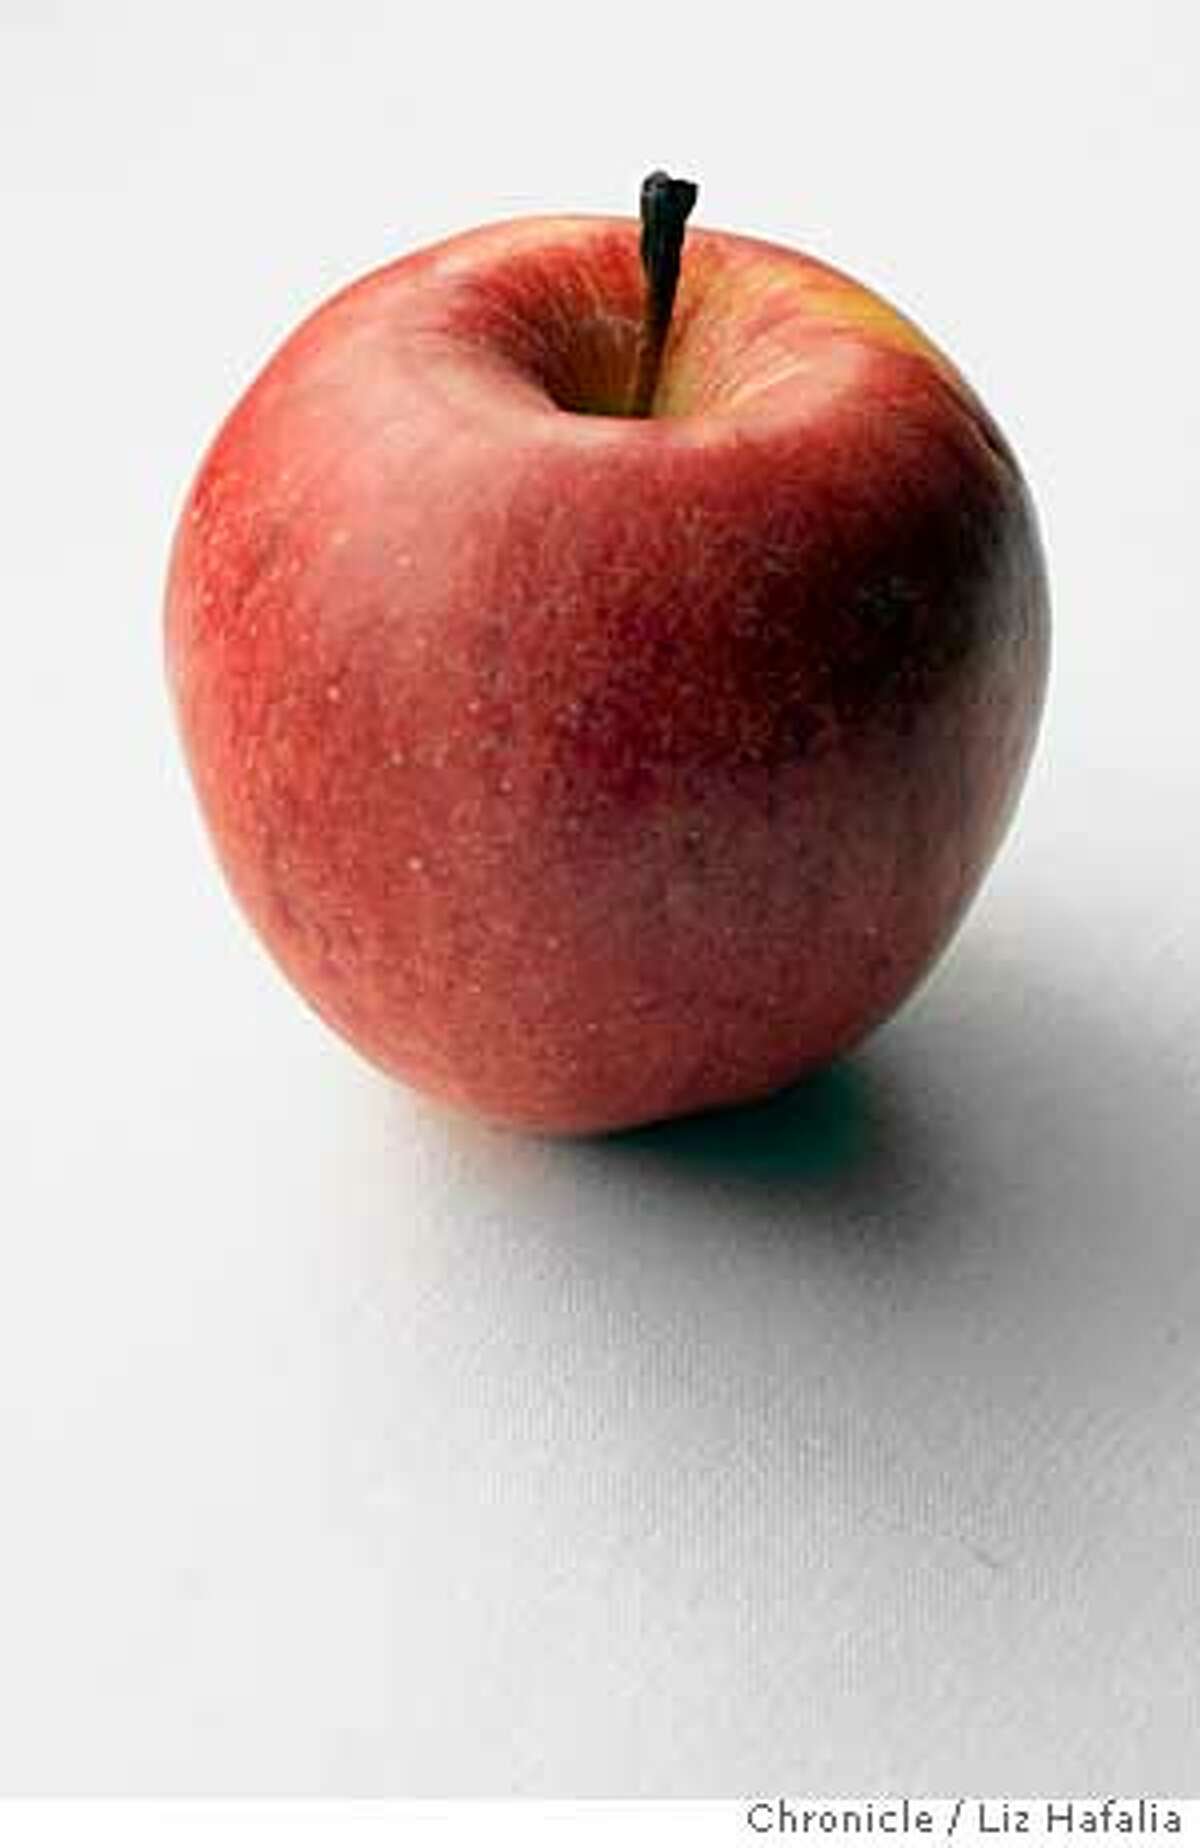 Apple Photographed by Liz Hafalia on 12/7/05 in San Francisco, California. Styled by Amanda Gold. SFC